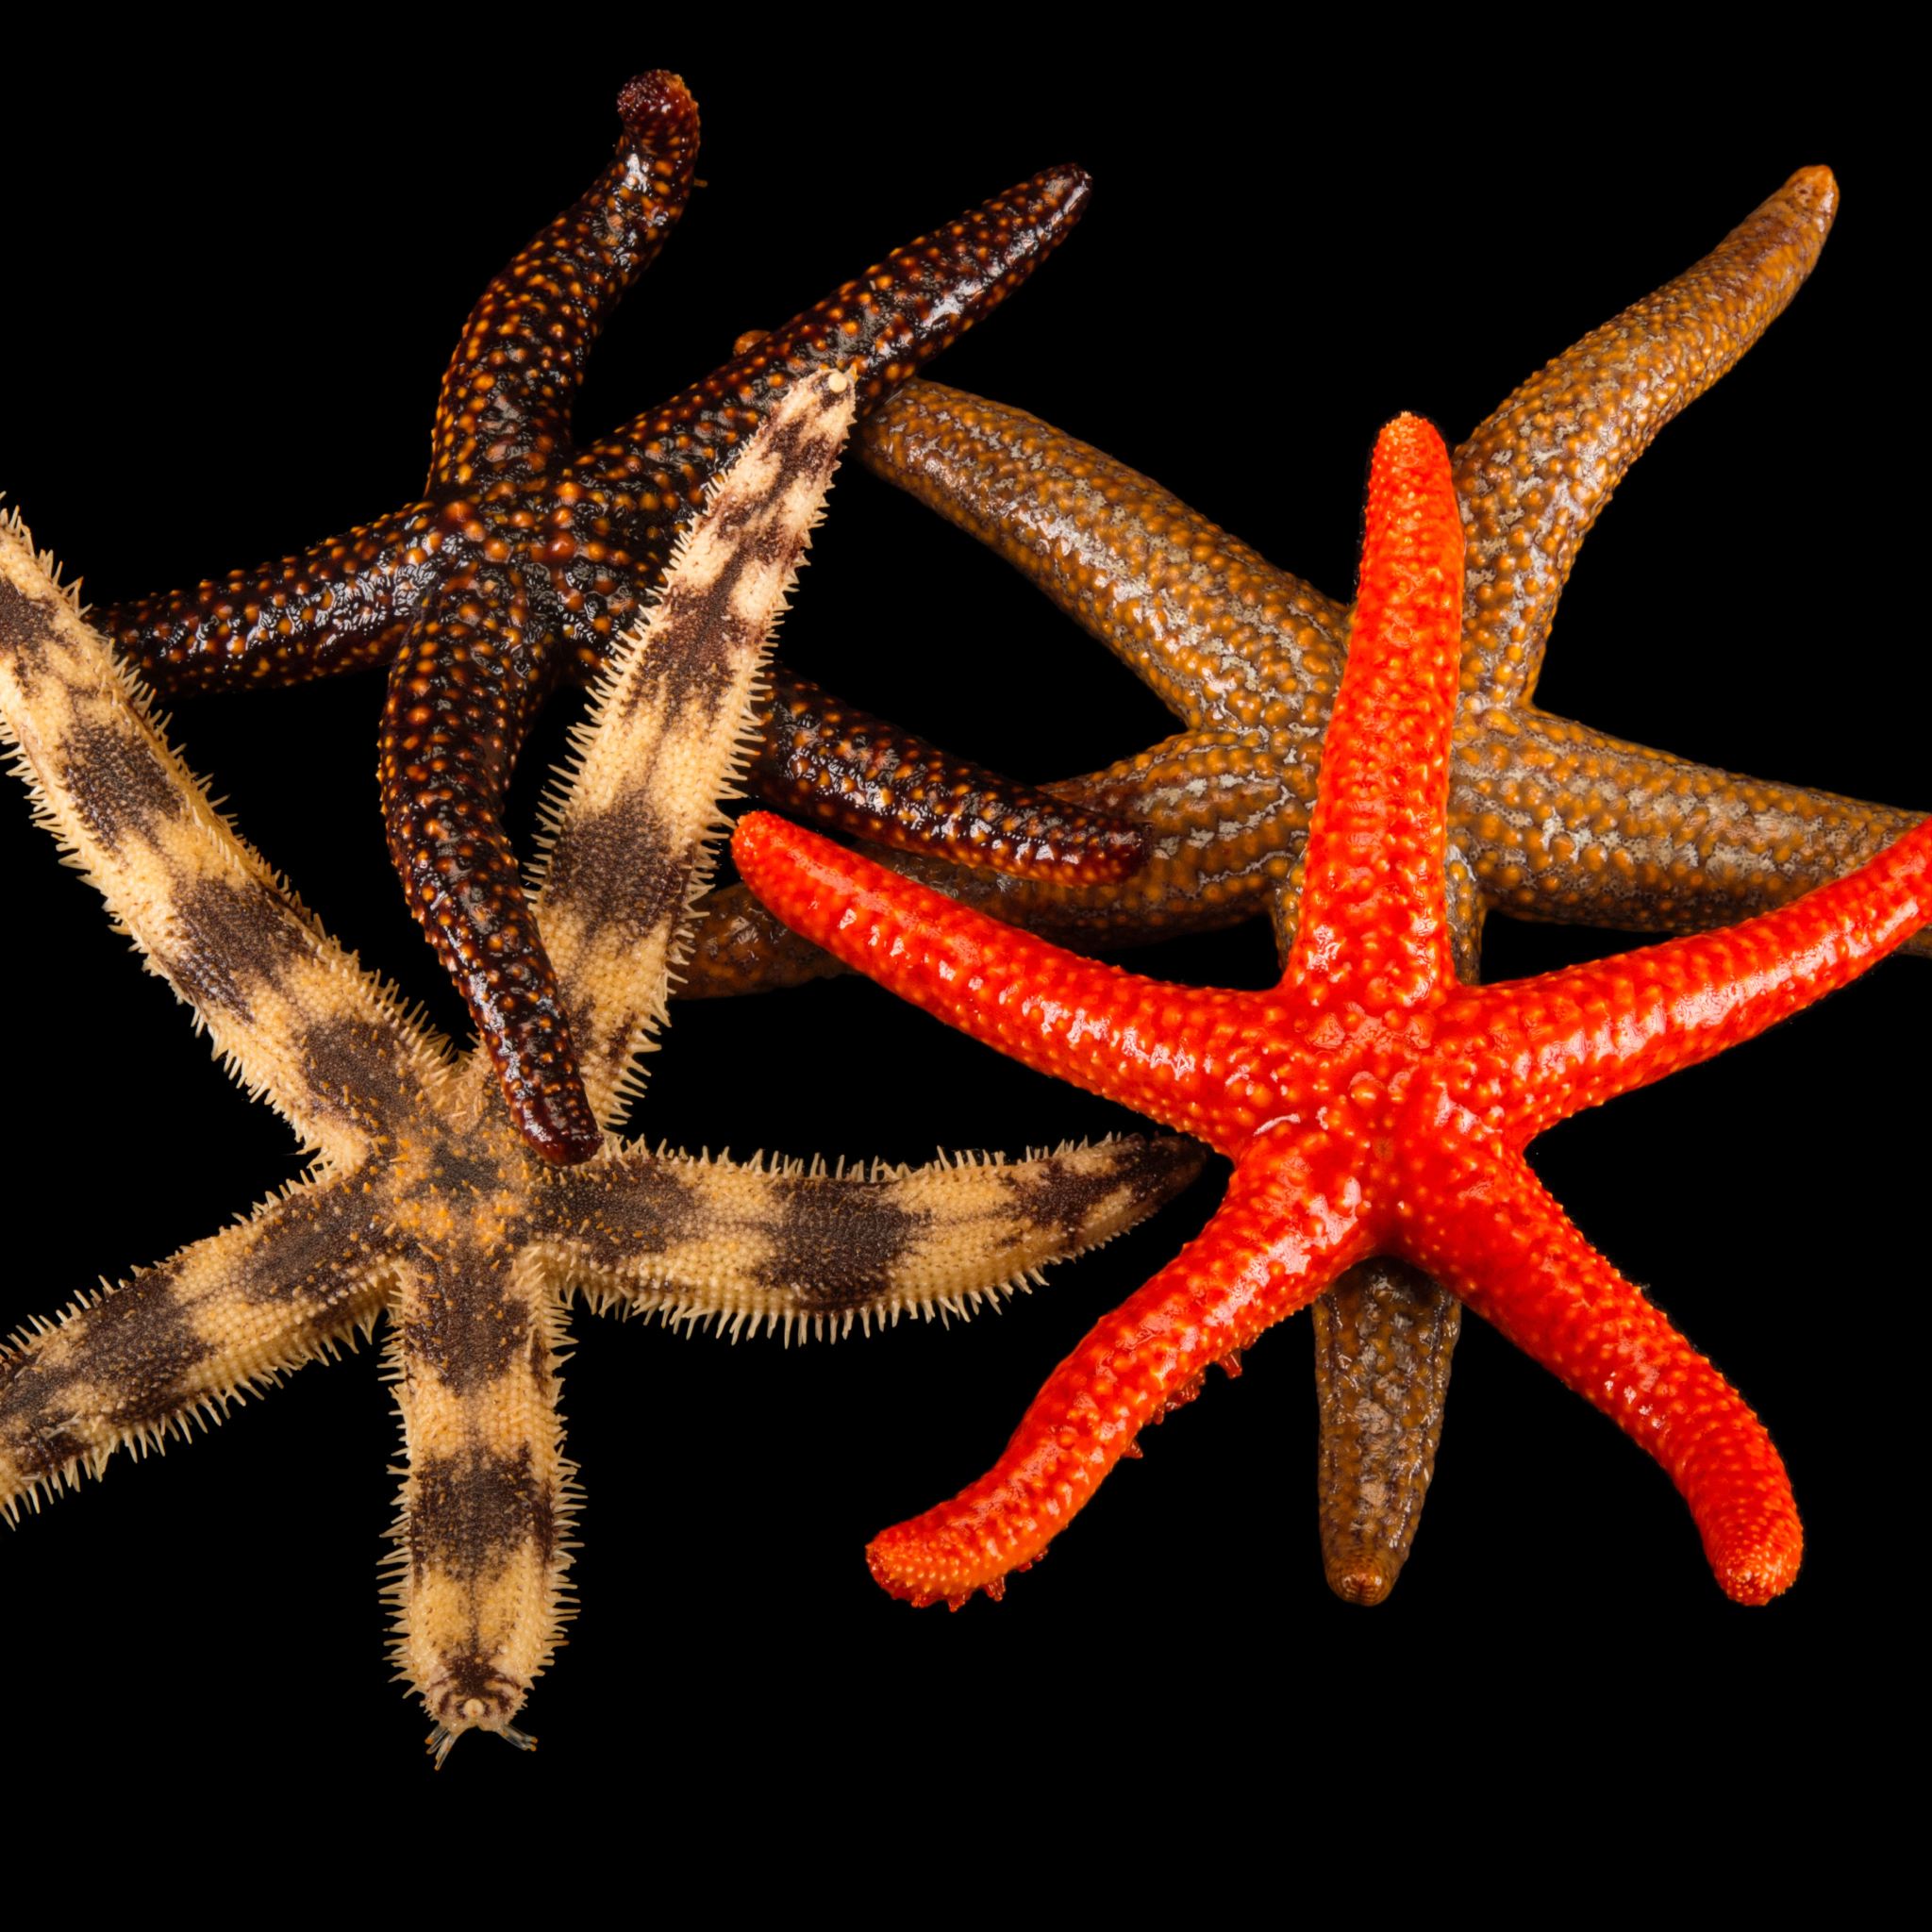 Starfish (Sea Stars) | National Geographic